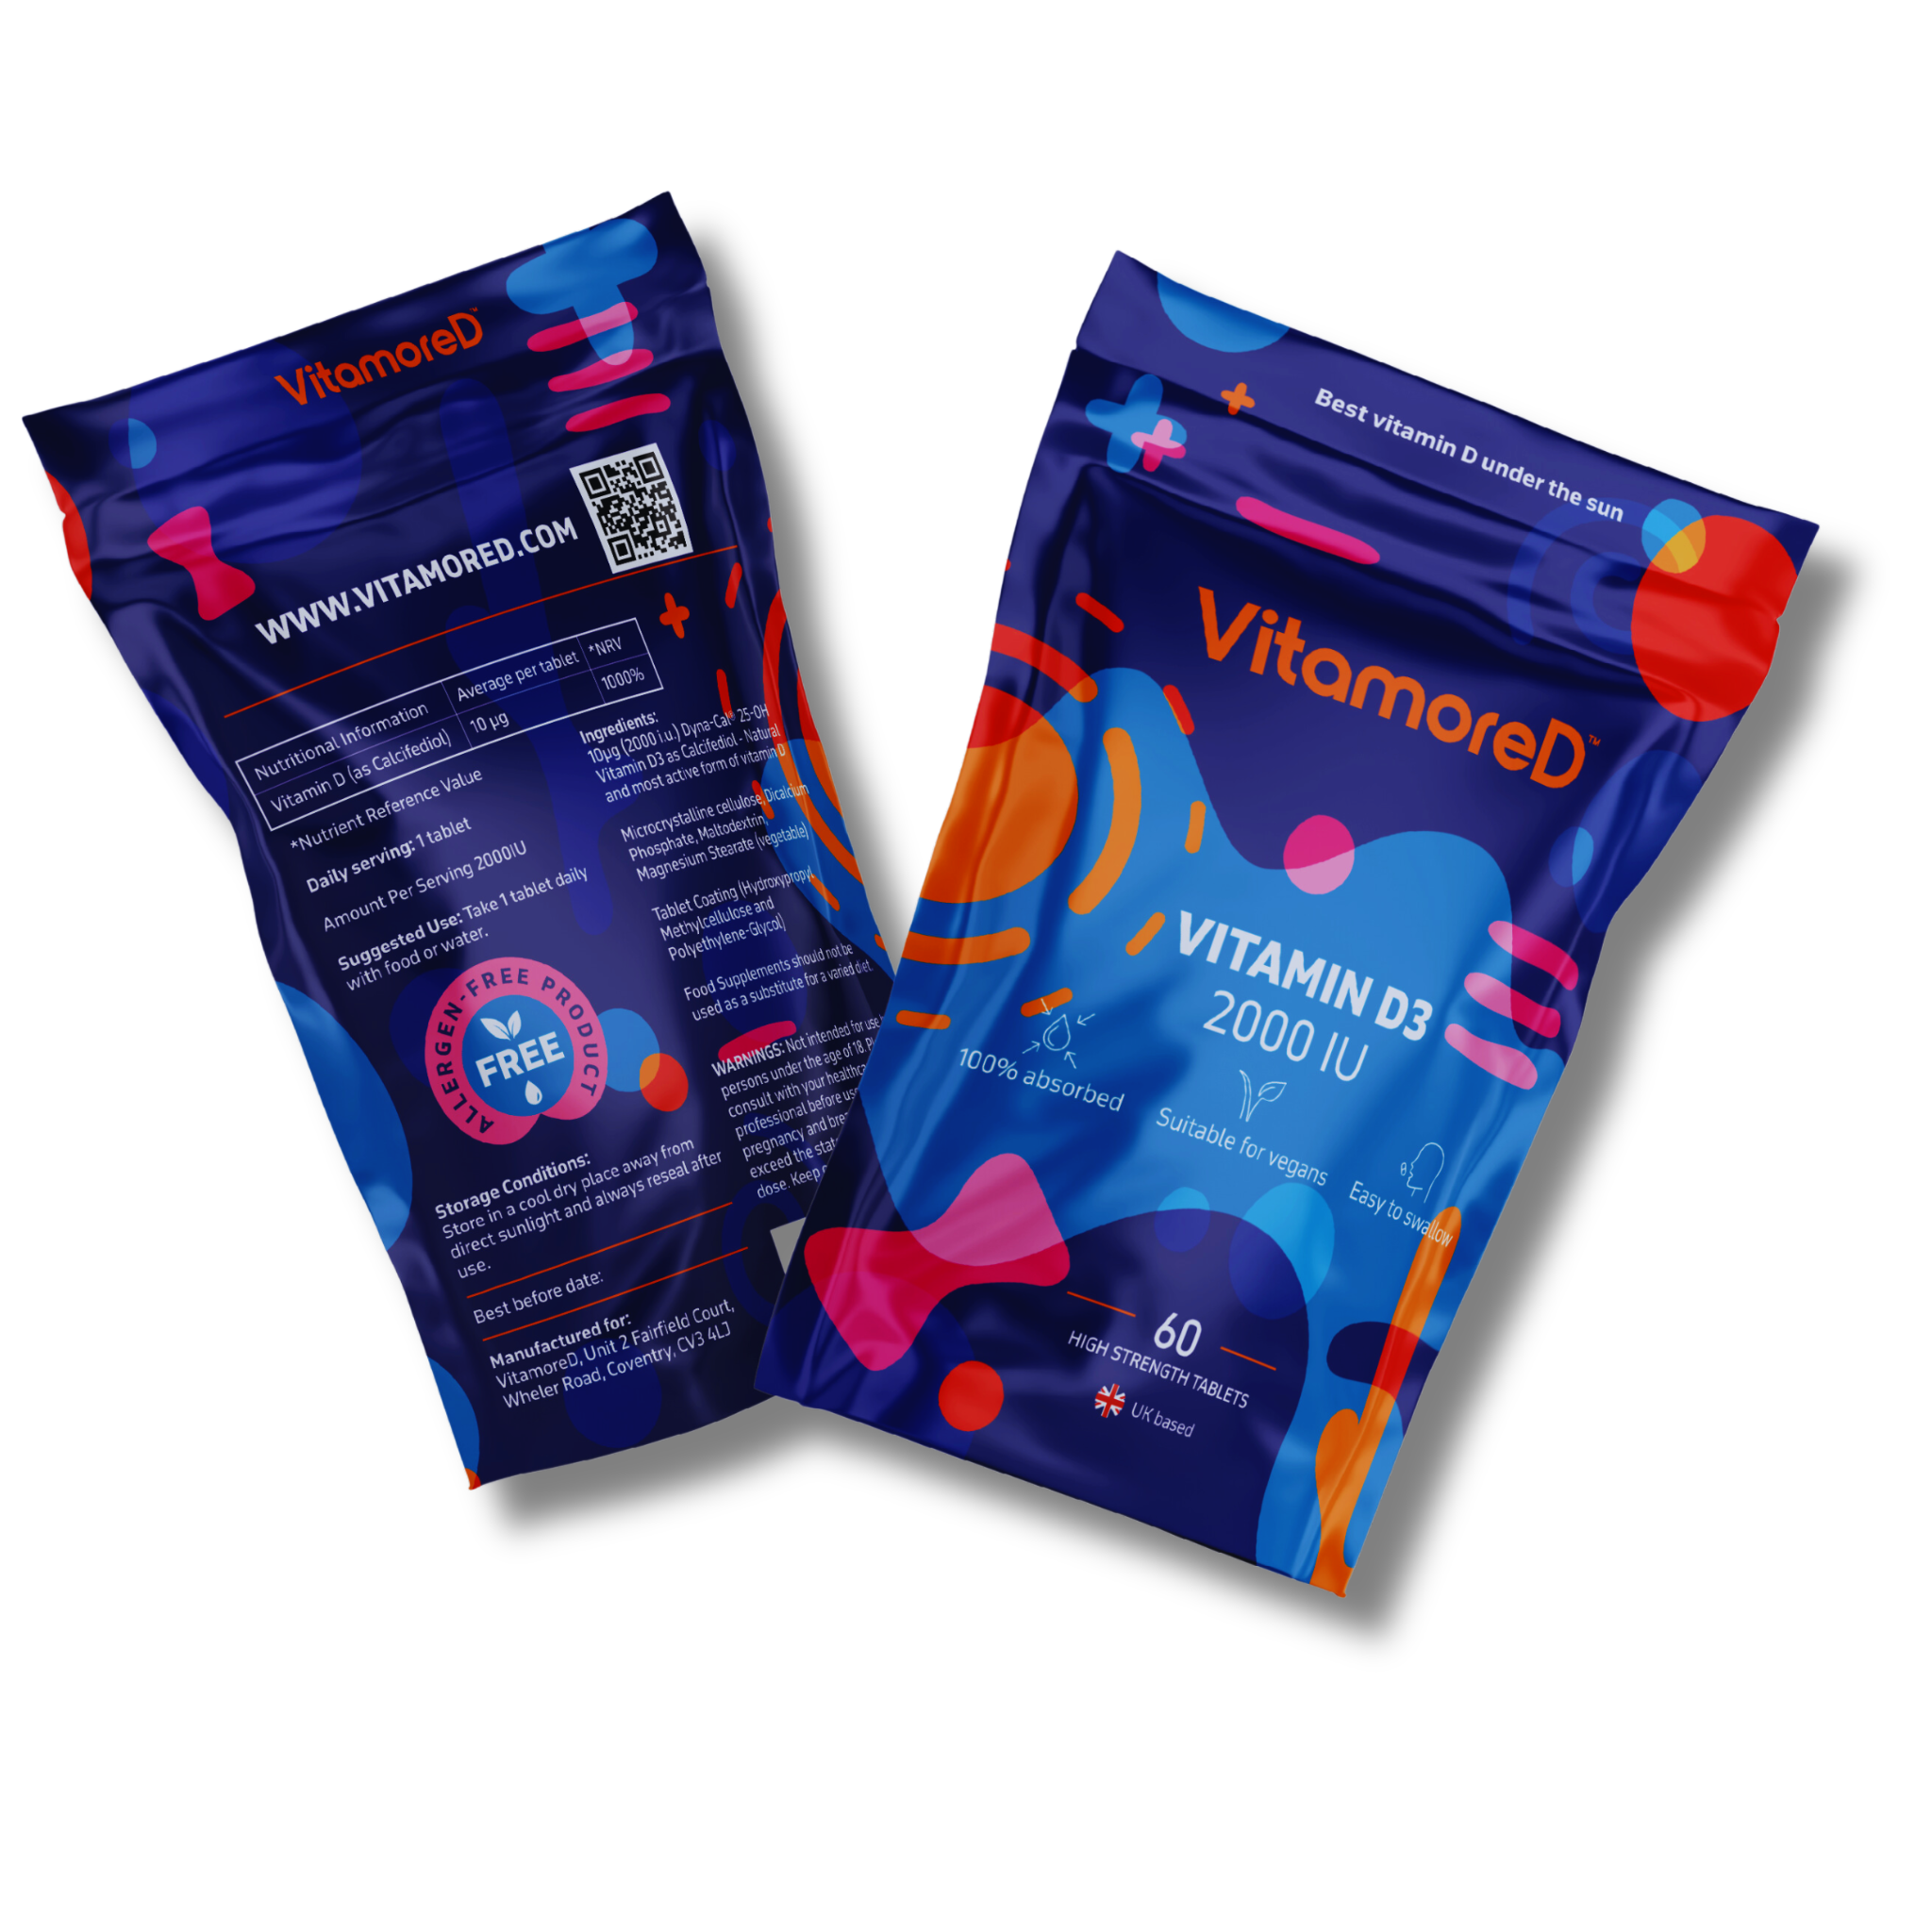 Vitamin D3 2000 IU as Calcifediol - 60 Tablets | VitamoreD